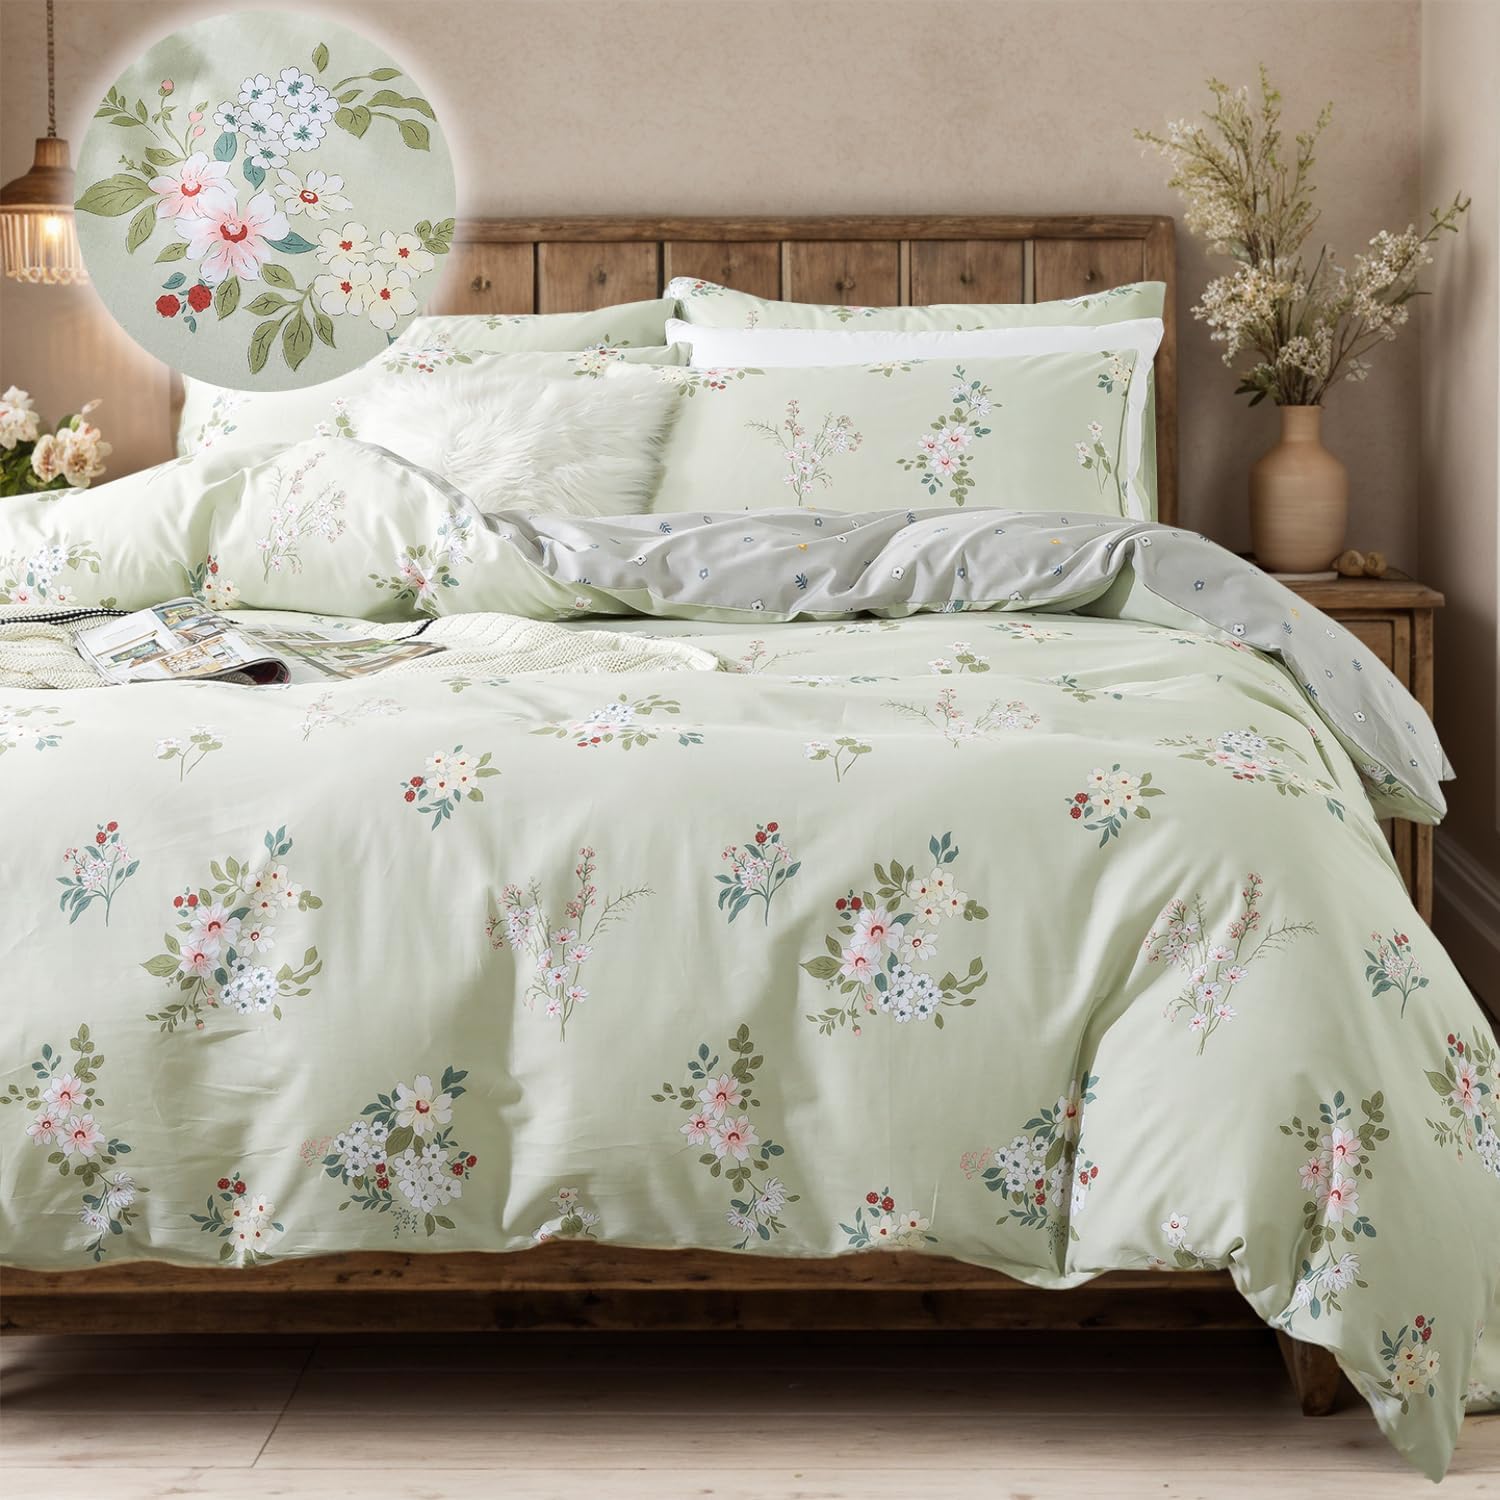 FADFAY Queen Duvet Cover Set Floral Comforter Cover 100% Cotton Girls Vintage Flower Bedding Garden Style Farmhouse Bedding for All Season Soft Bedding with 2 Pillowcases, Queen